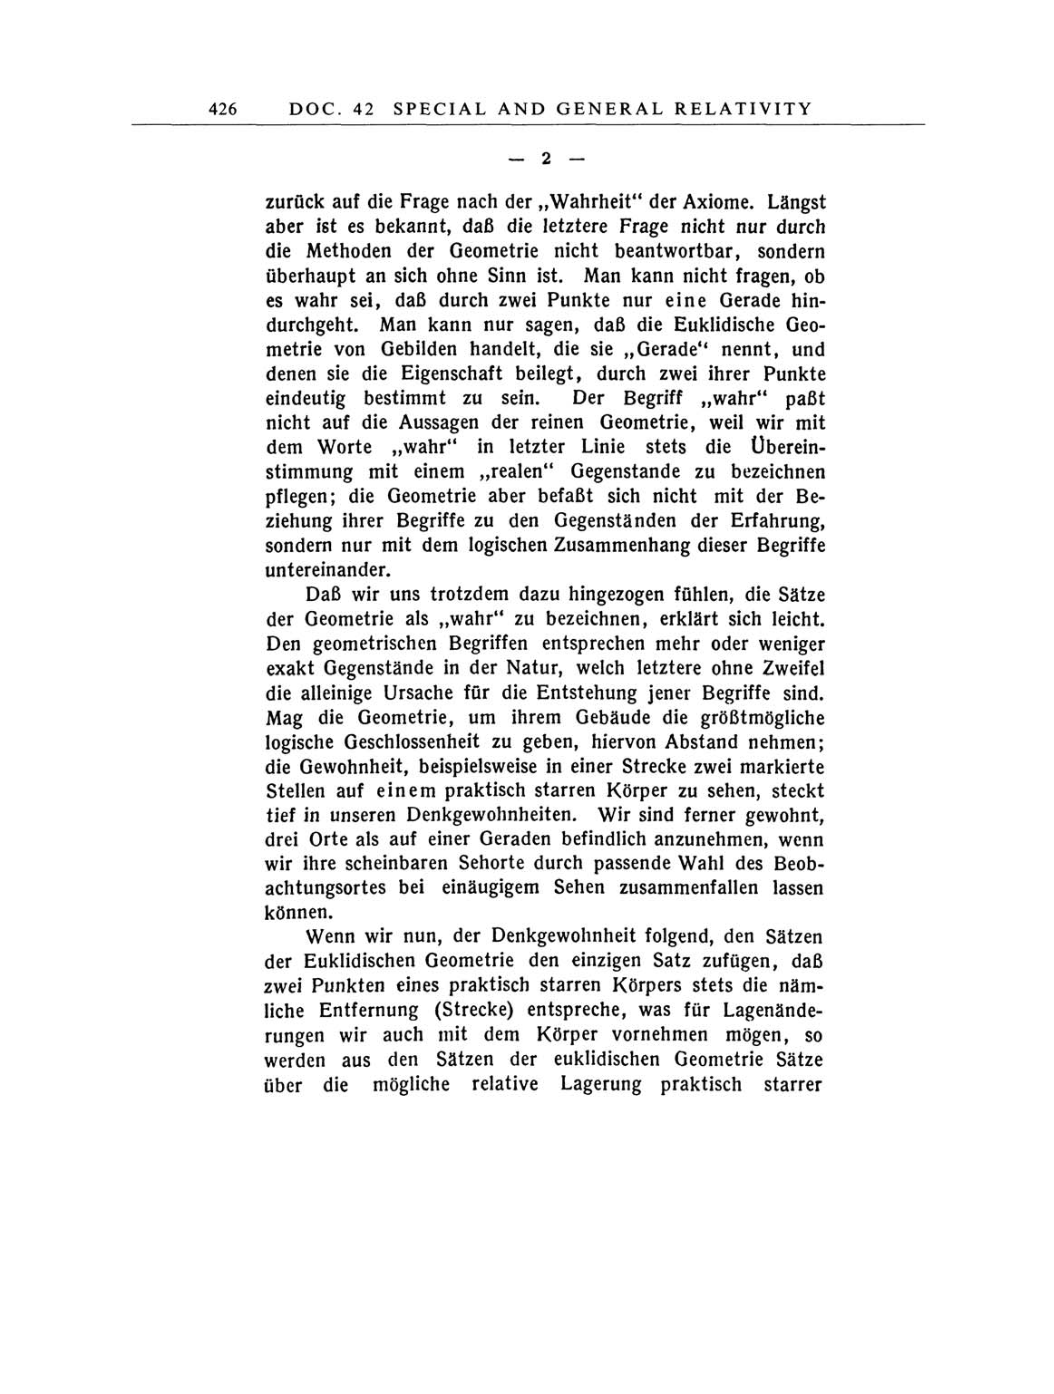 Volume 6: The Berlin Years: Writings, 1914-1917 page 426